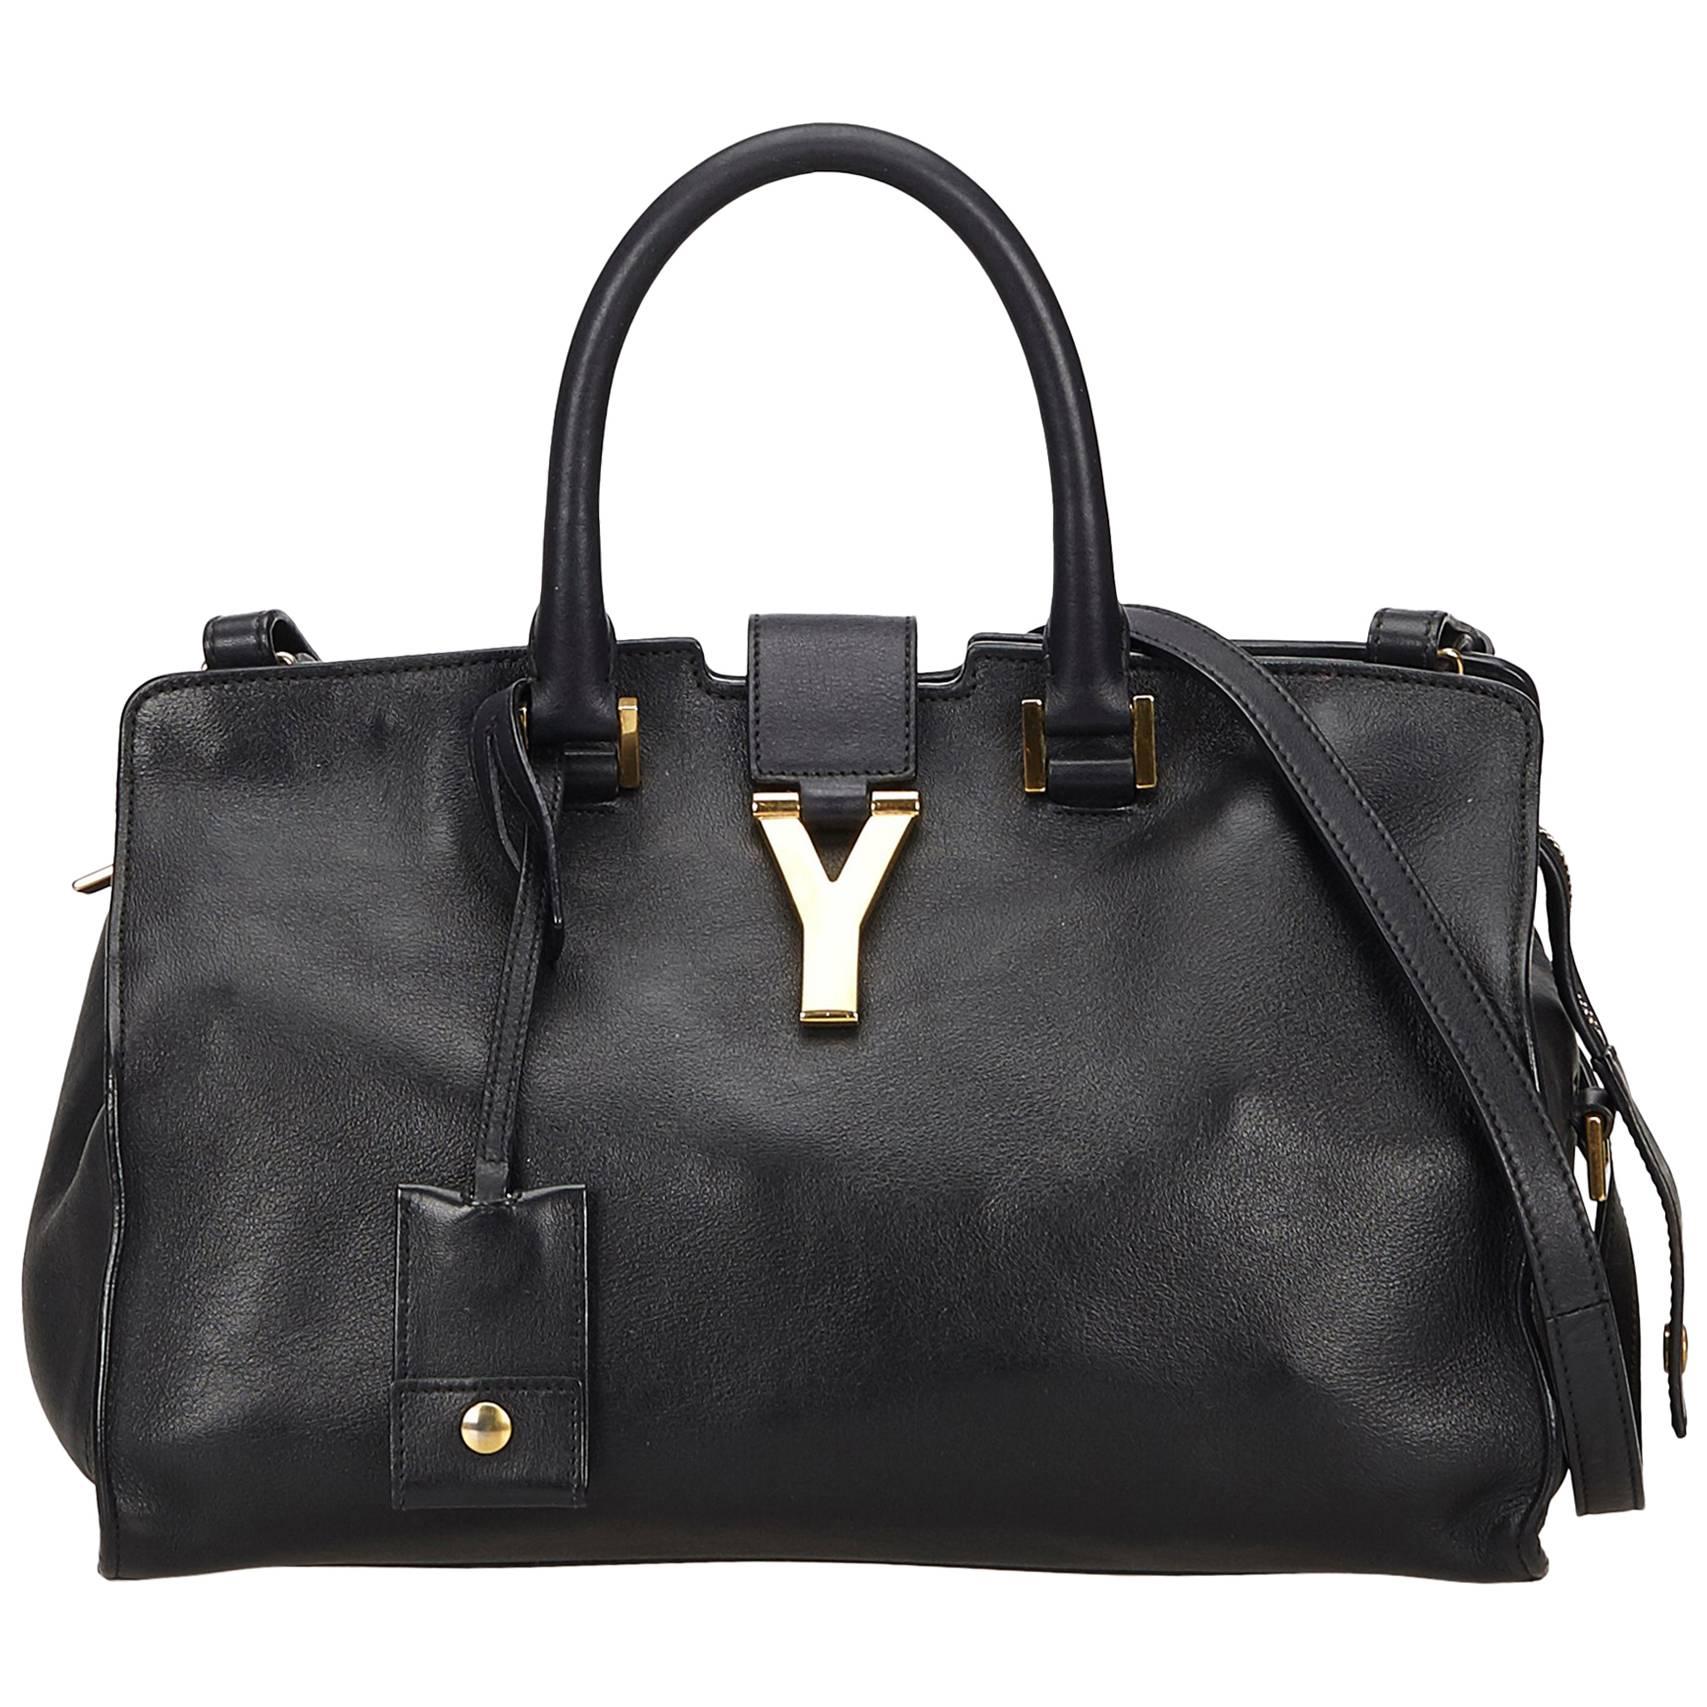 Yves Saint Laurent YSL Black Small Cabas Chyc Bag